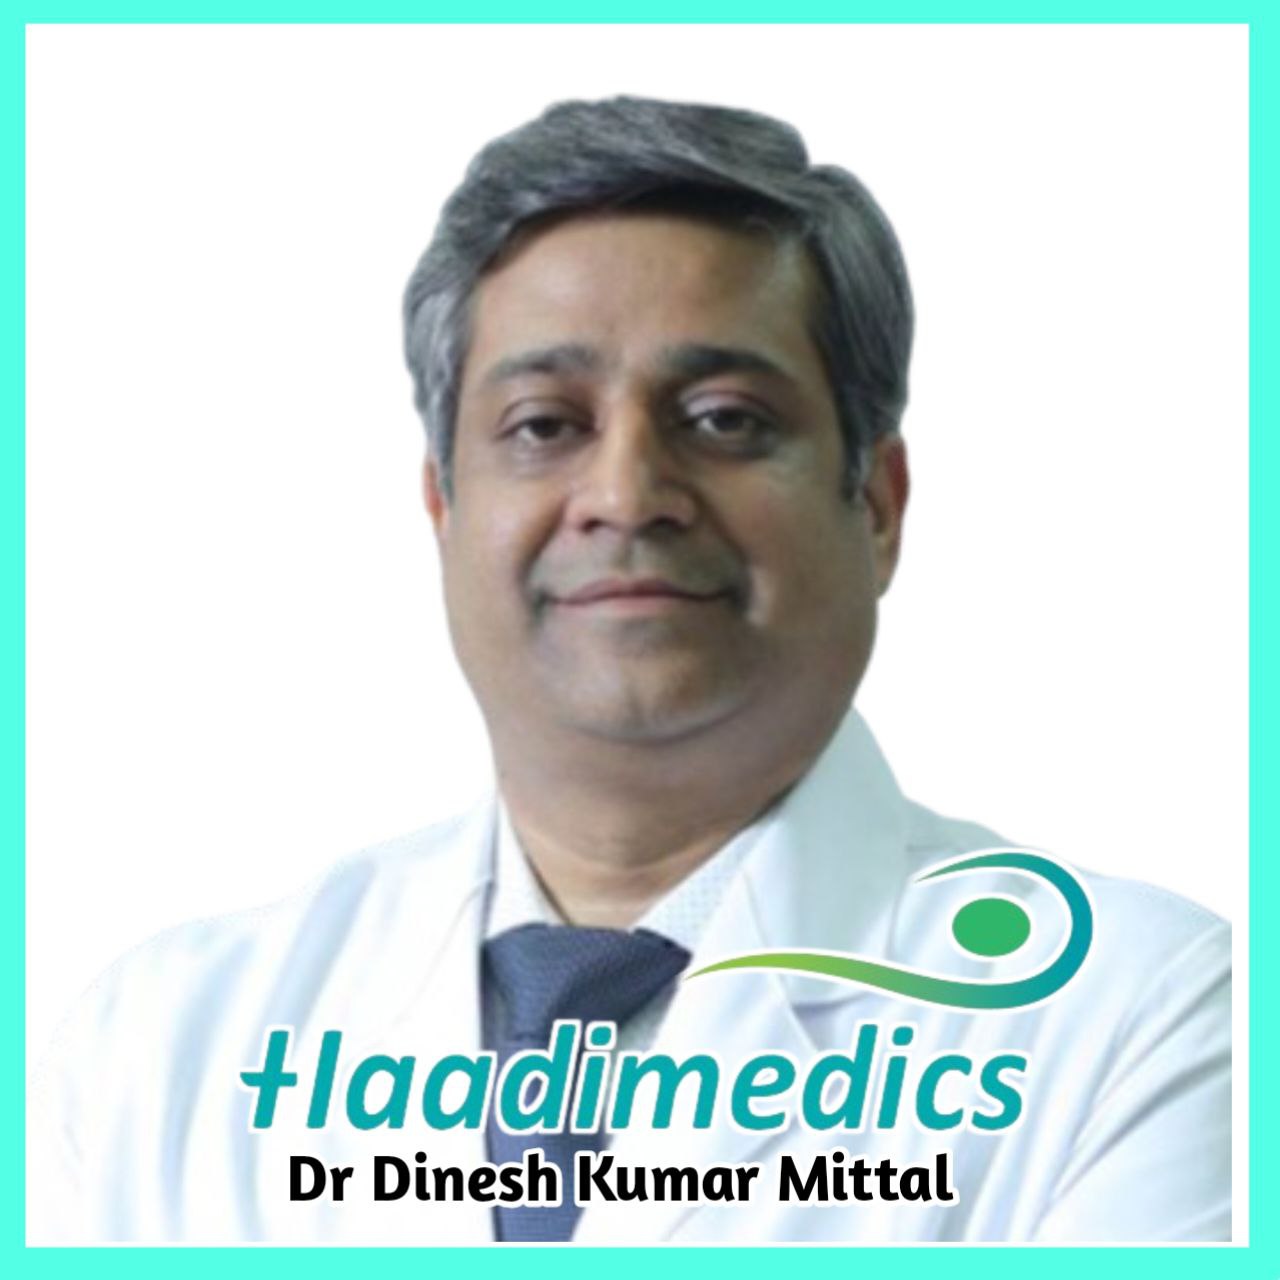 Dr Dinesh Kumar Mittal